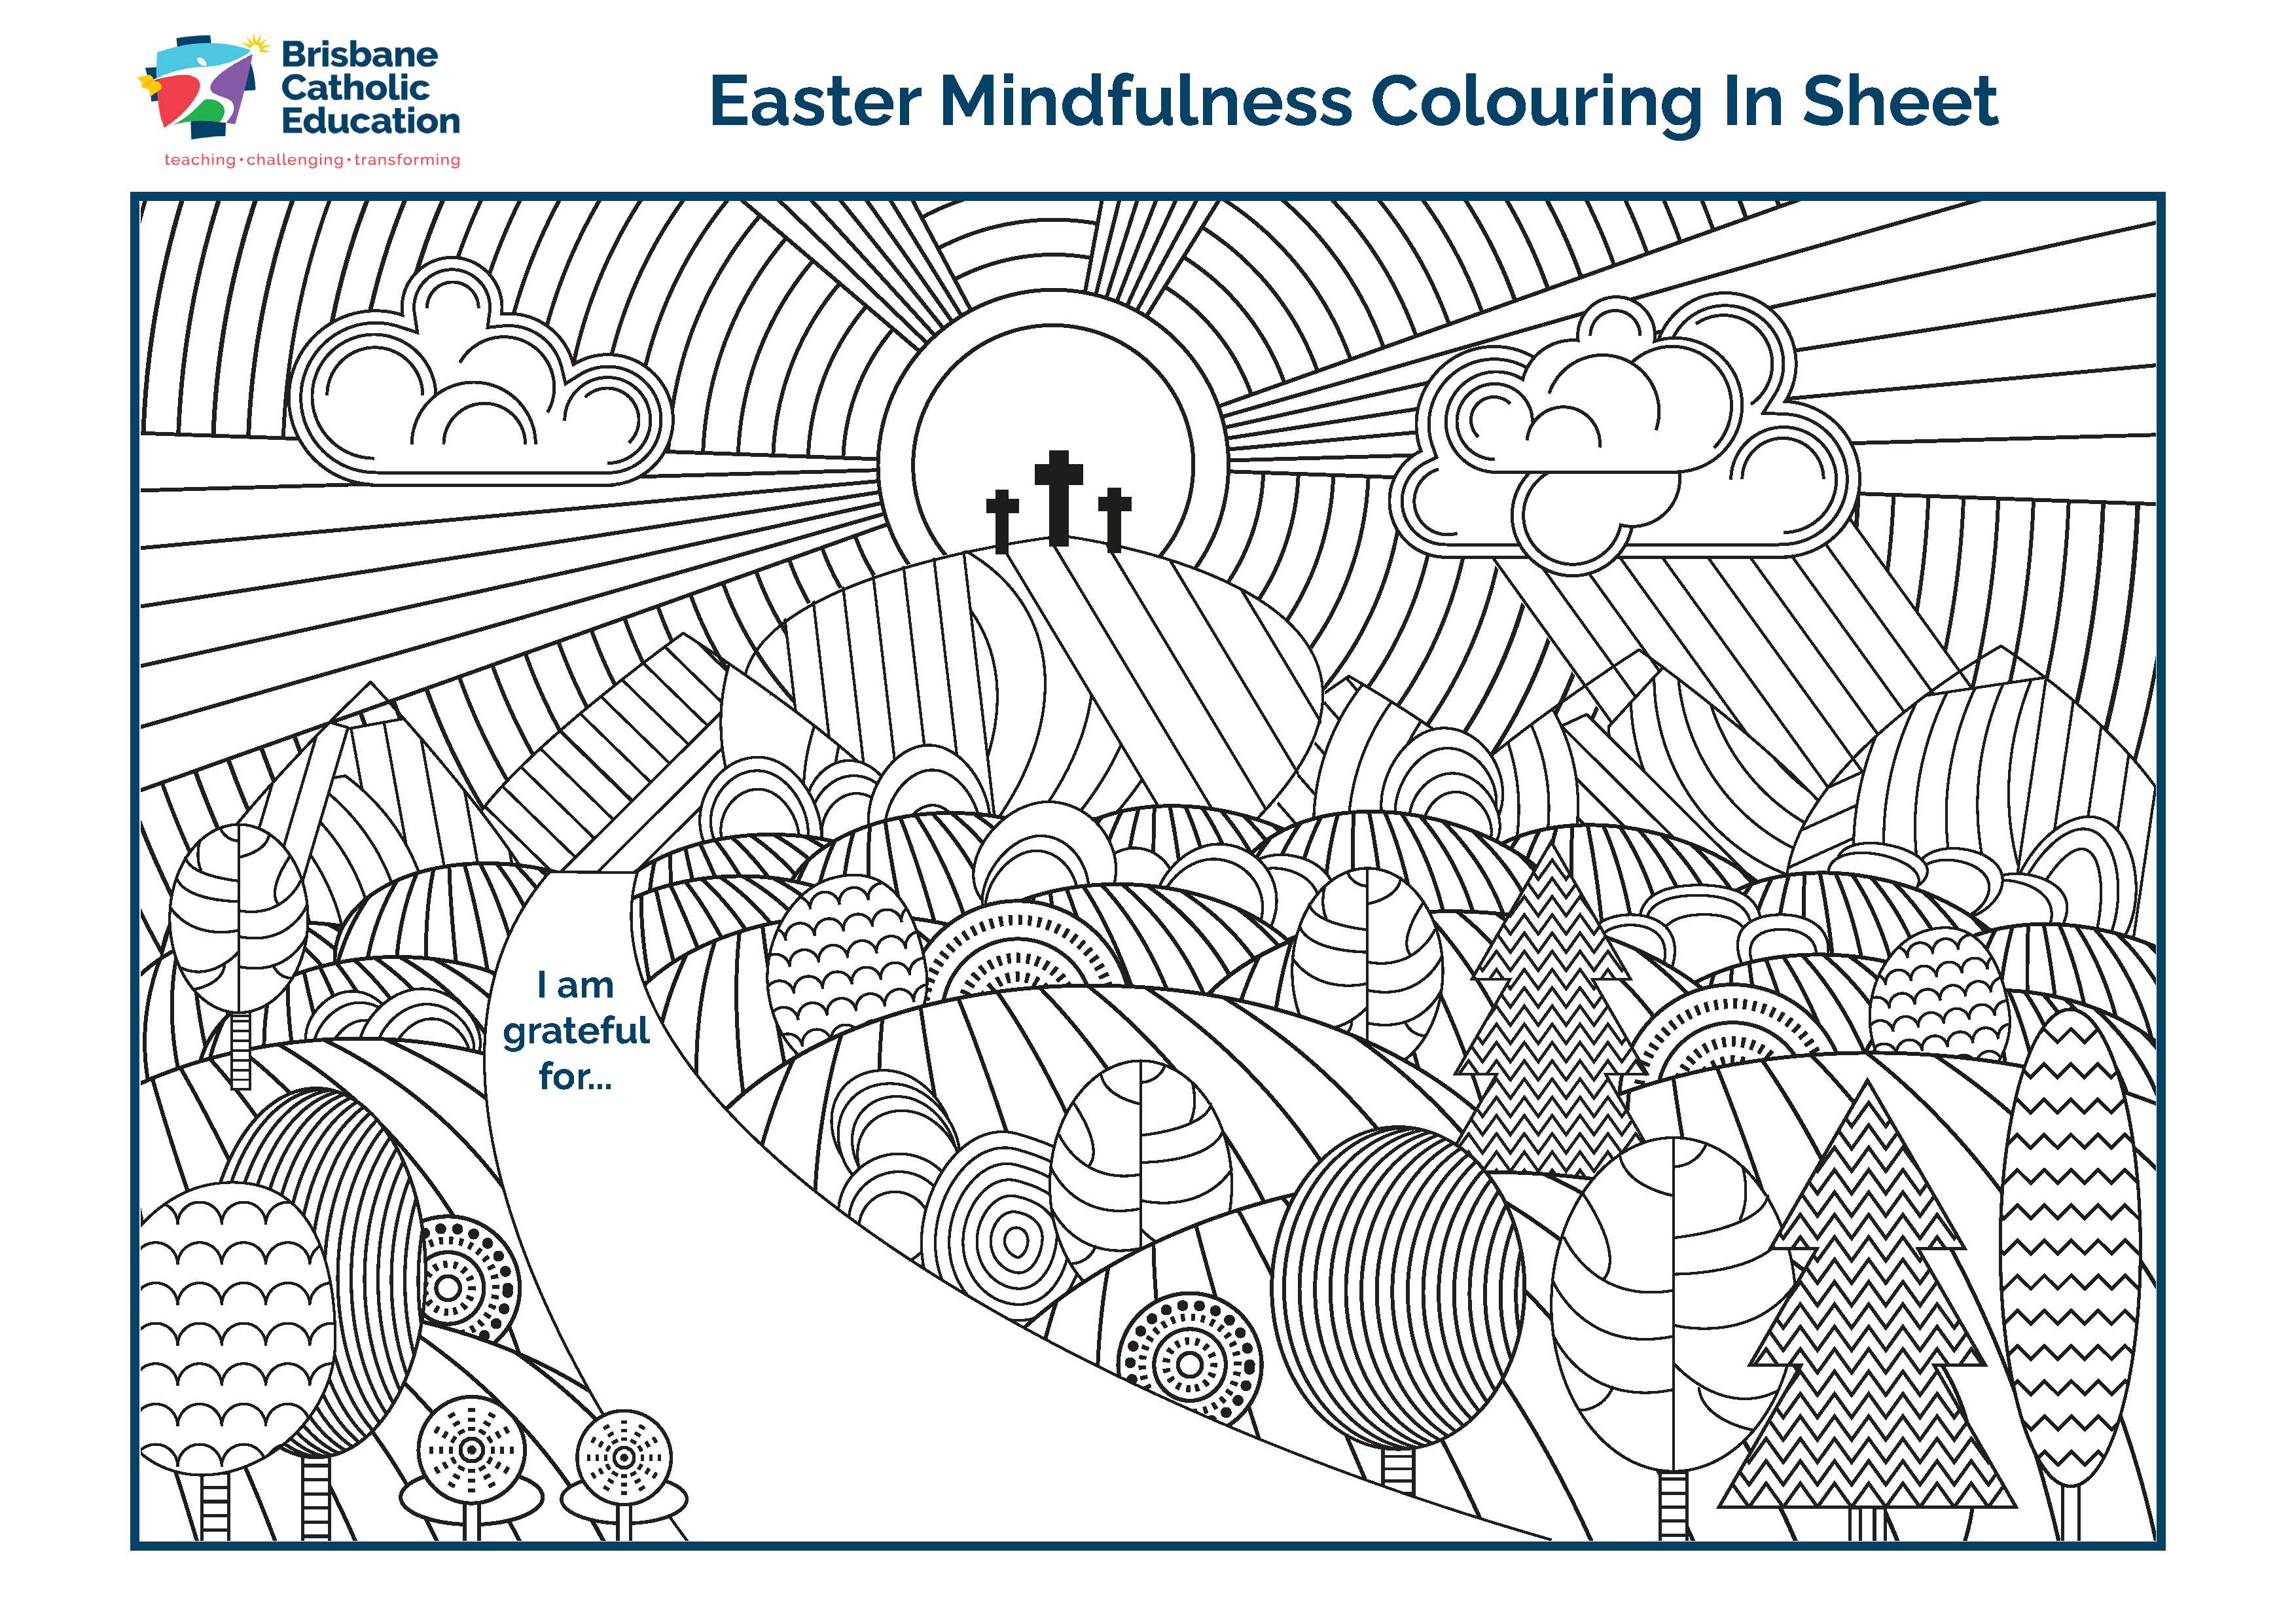 Easter Mindfulness Colouring Sheet.jpg